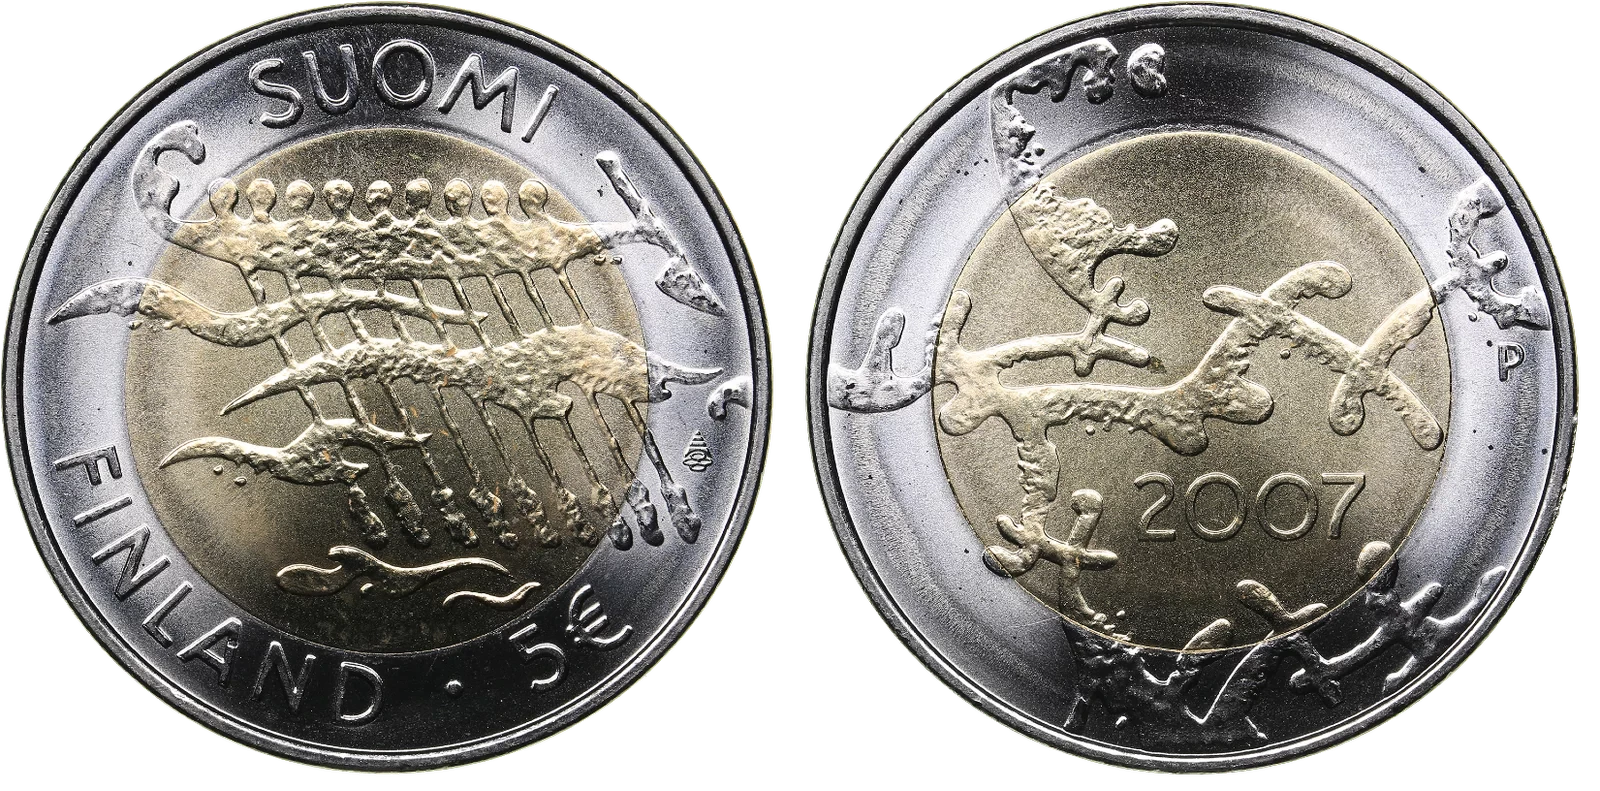 Finlandia - 5 Euros 2007 - Independencia